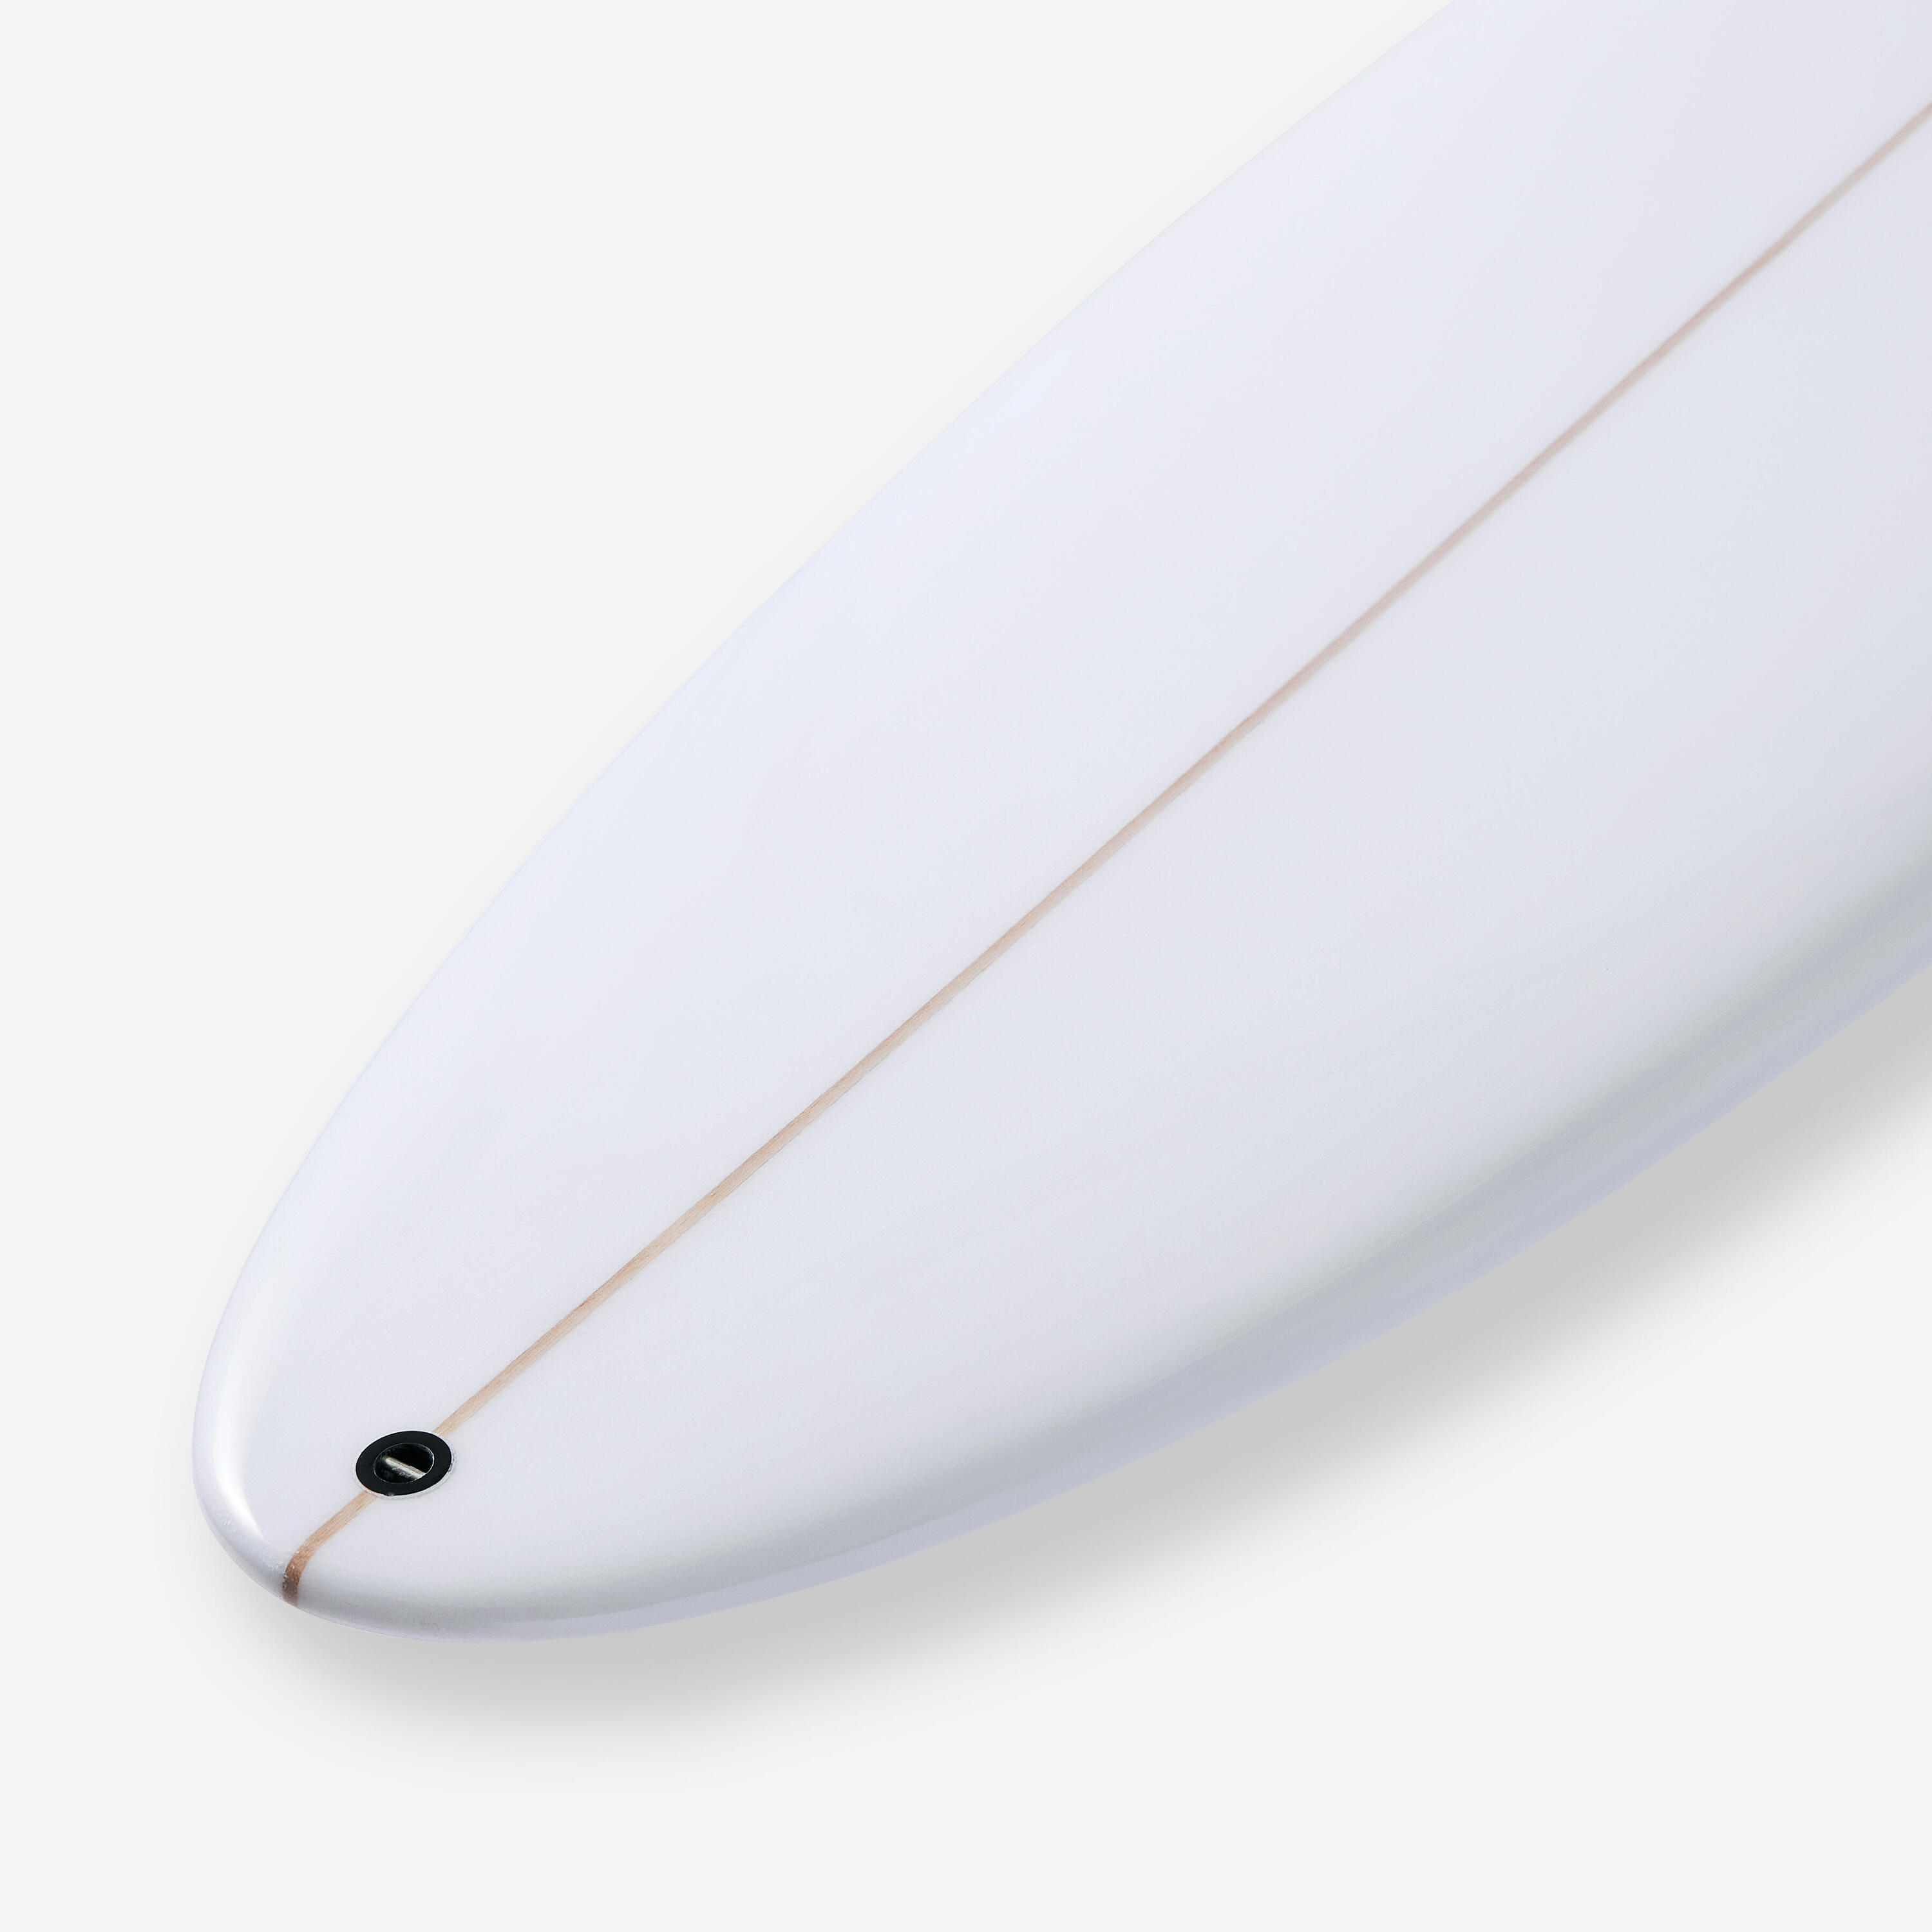 Surfboard 7'4" - 900 mid-length white 5/10